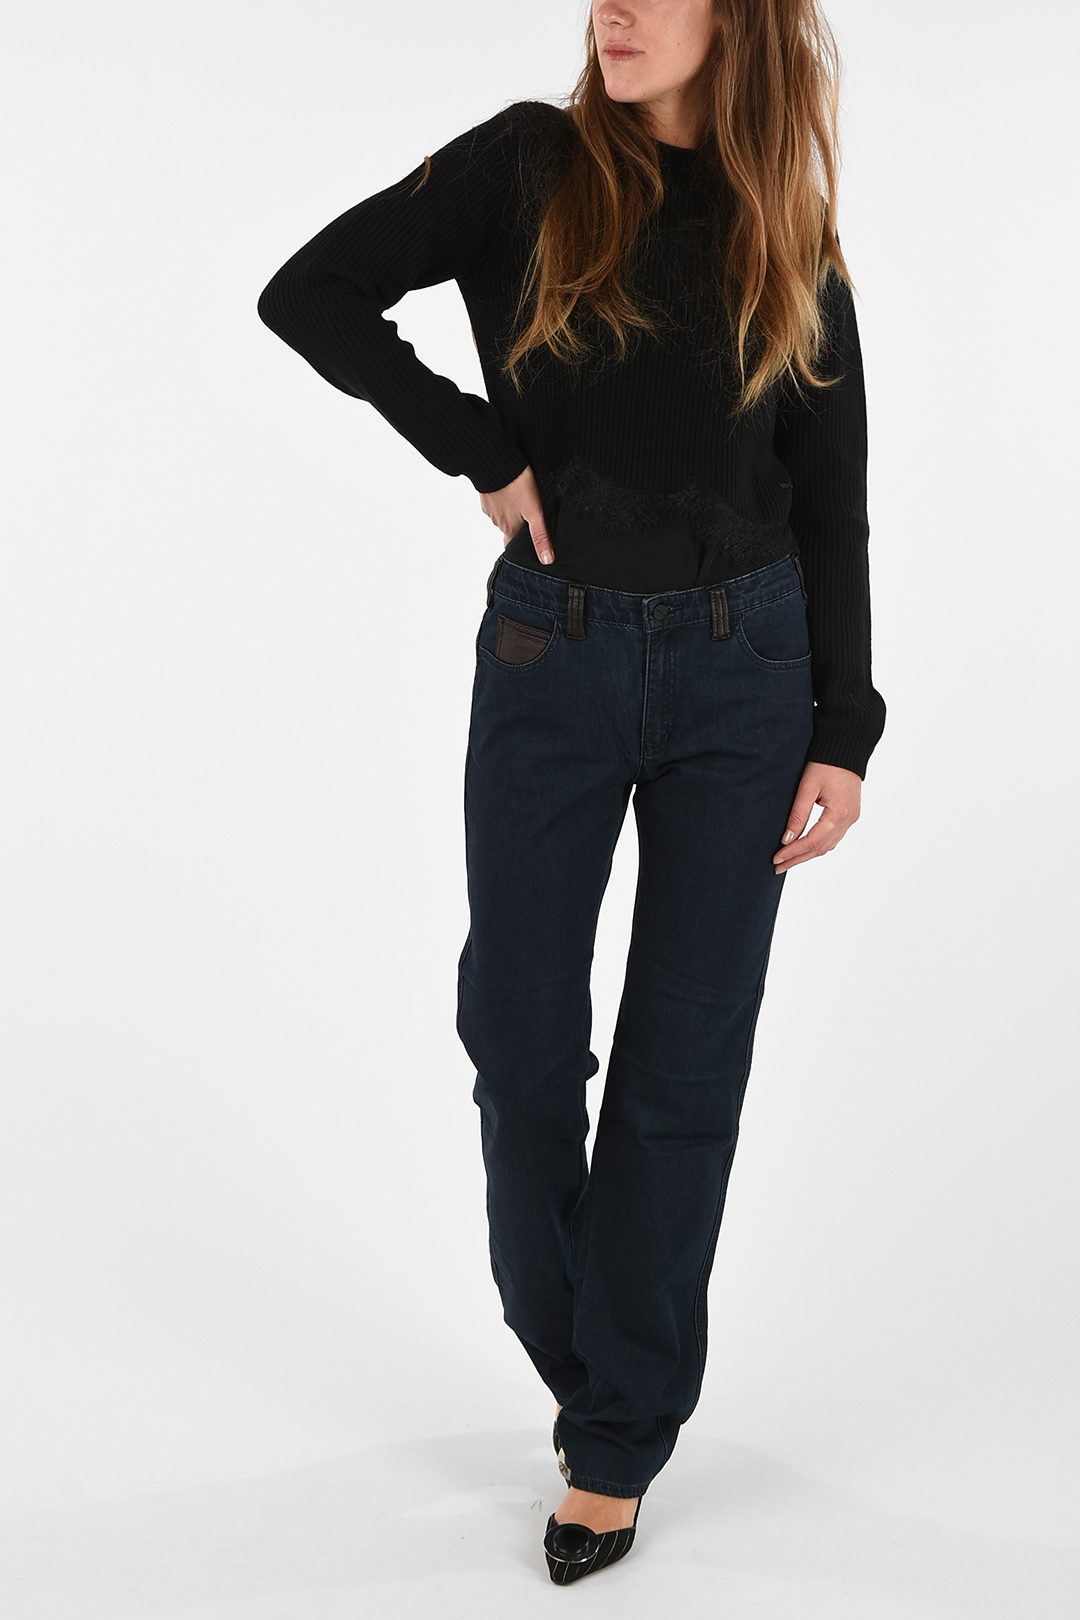 Armani ARMANI JEANS Jeans J75 Regular Fit women - Glamood Outlet